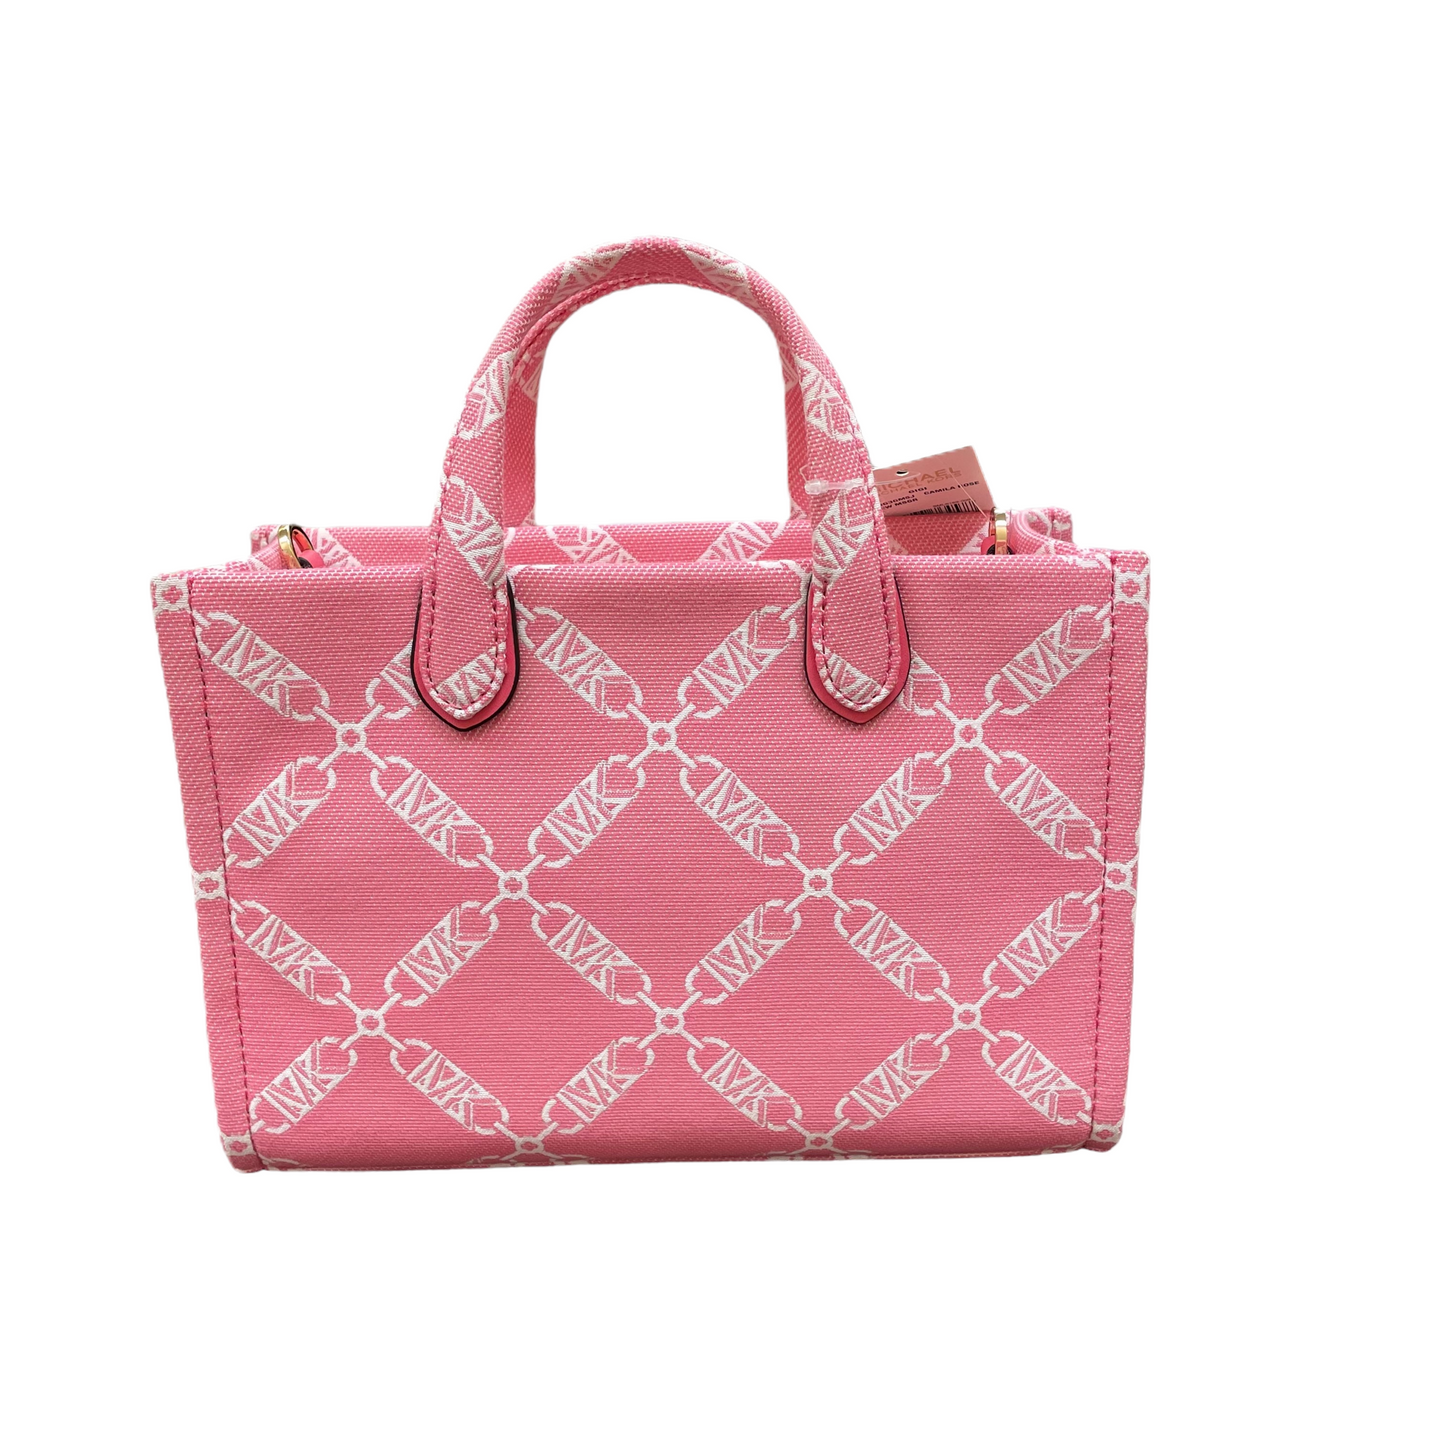 Handbag Designer By Michael Kors, Size: Small